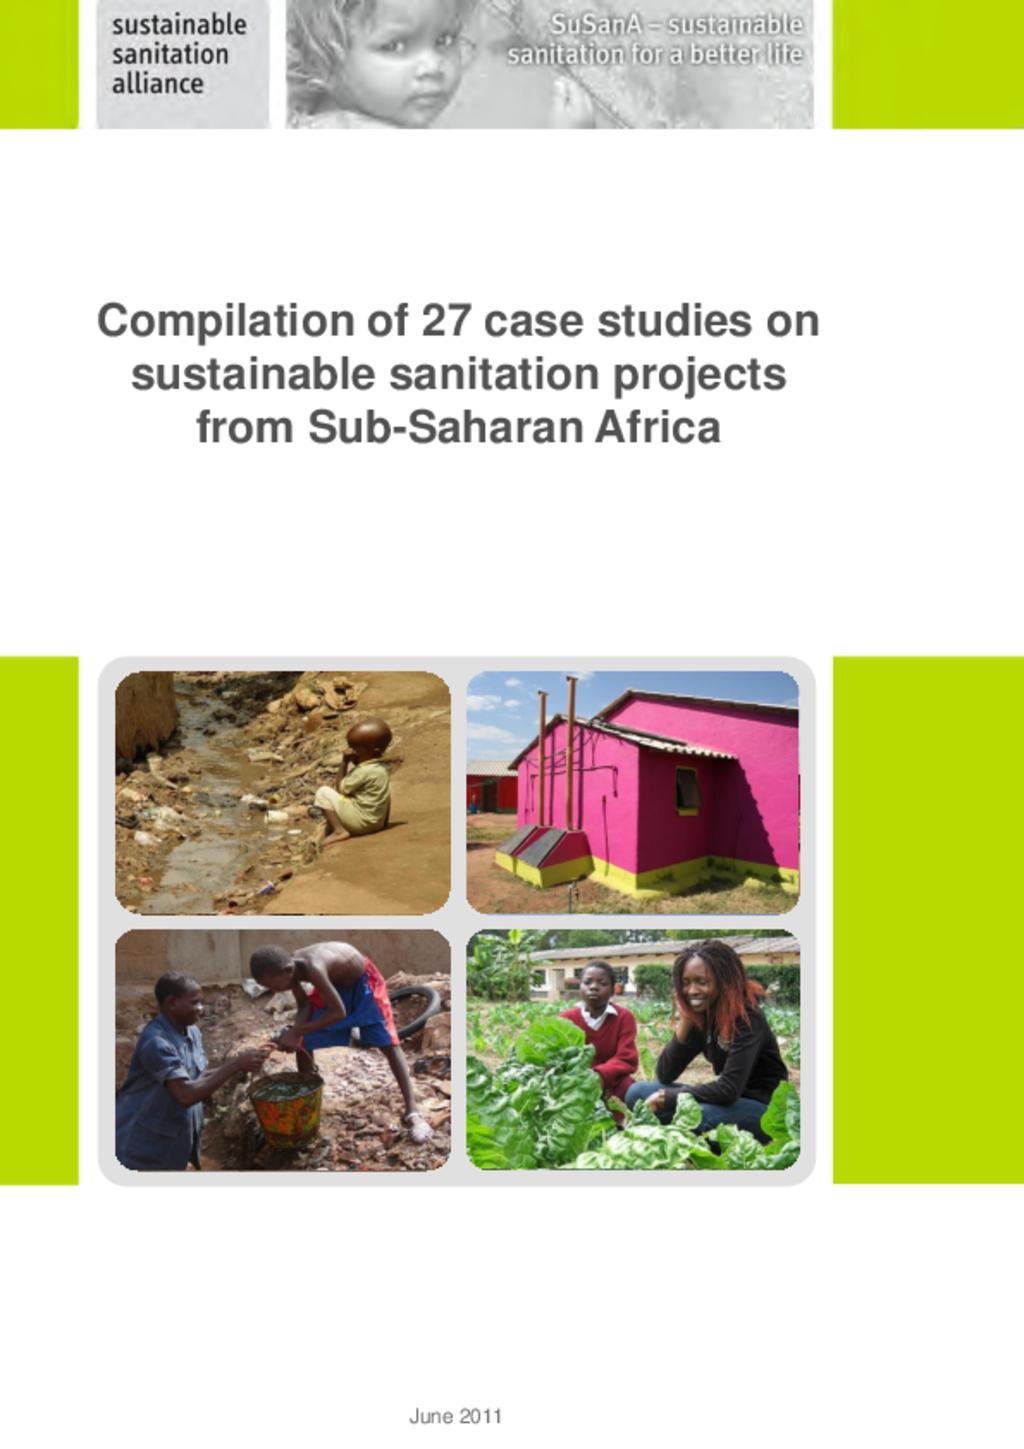 Sub-Saharan Africa sanitation case studies